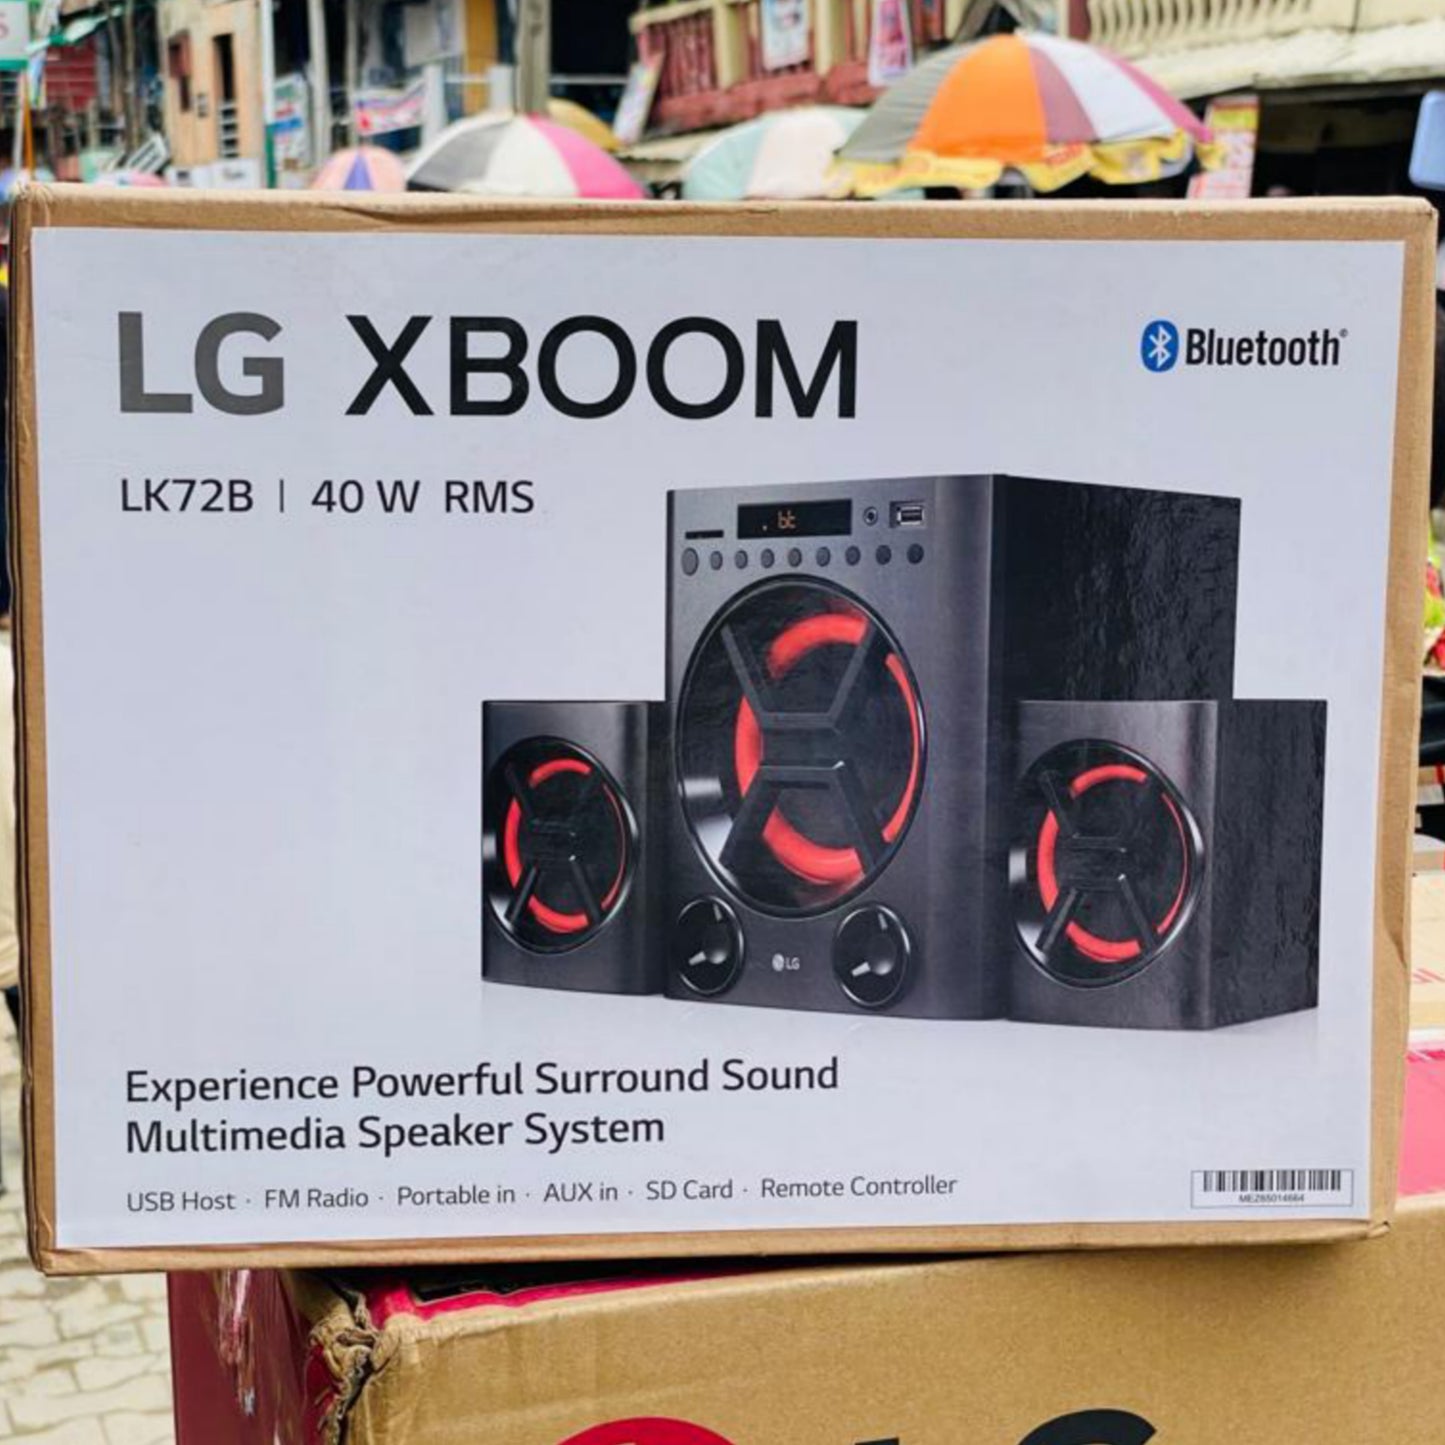 LG XBOOM LK72B Home Theater Sound System